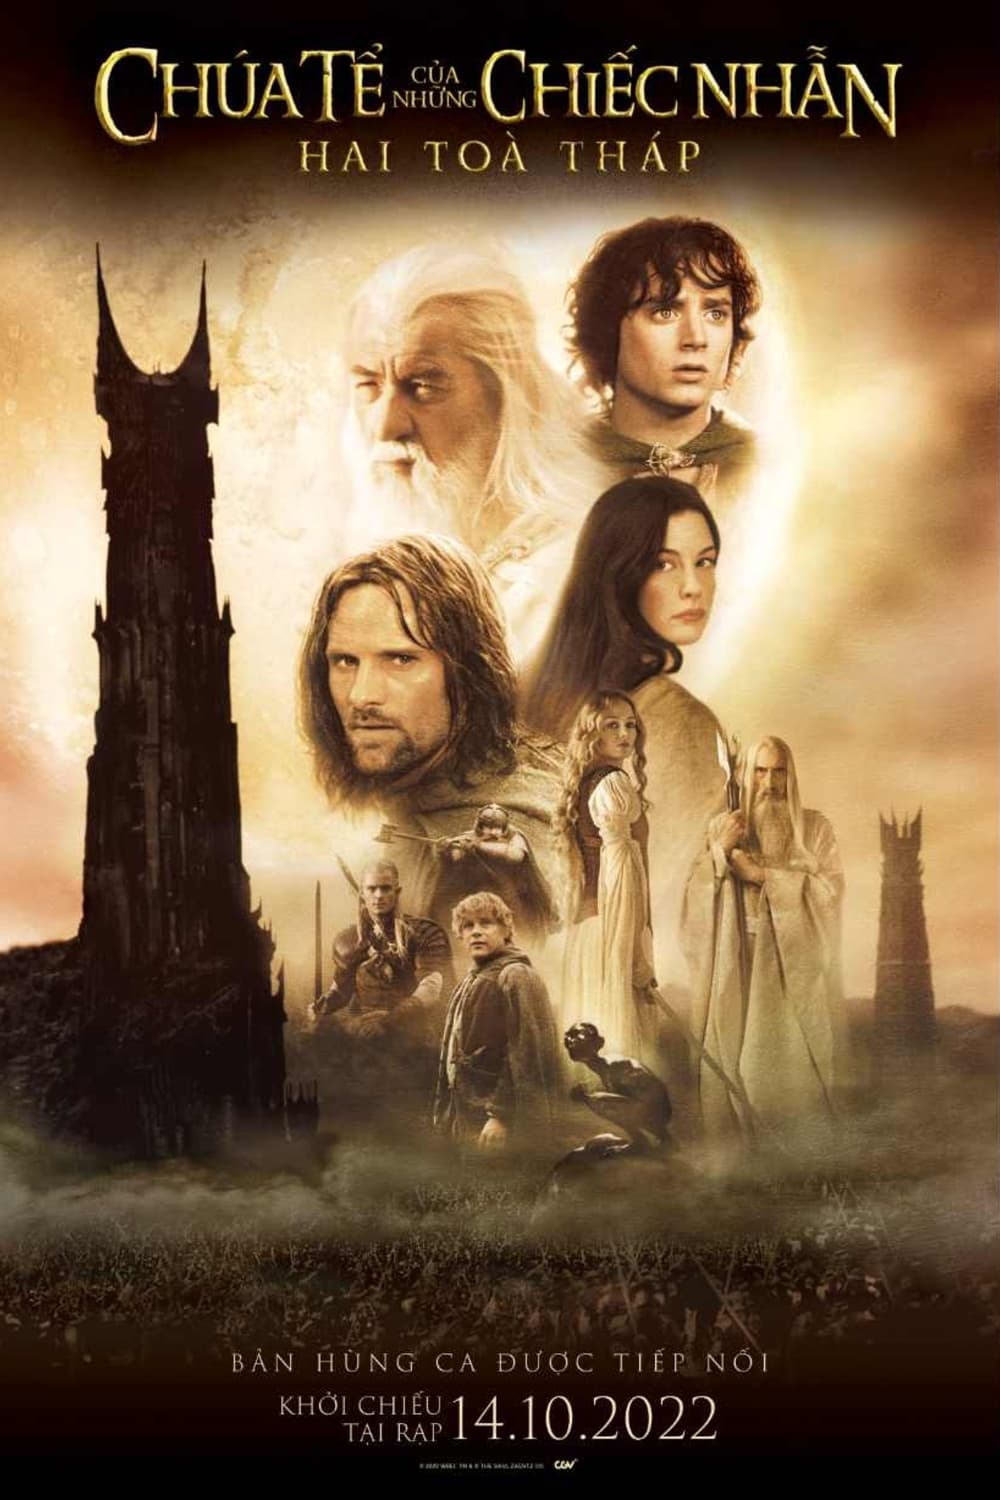 Chúa Tể Của Những Chiếc Nhẫn: Hai Tòa Tháp (The Lord of the Rings: The Two Towers) [2002]